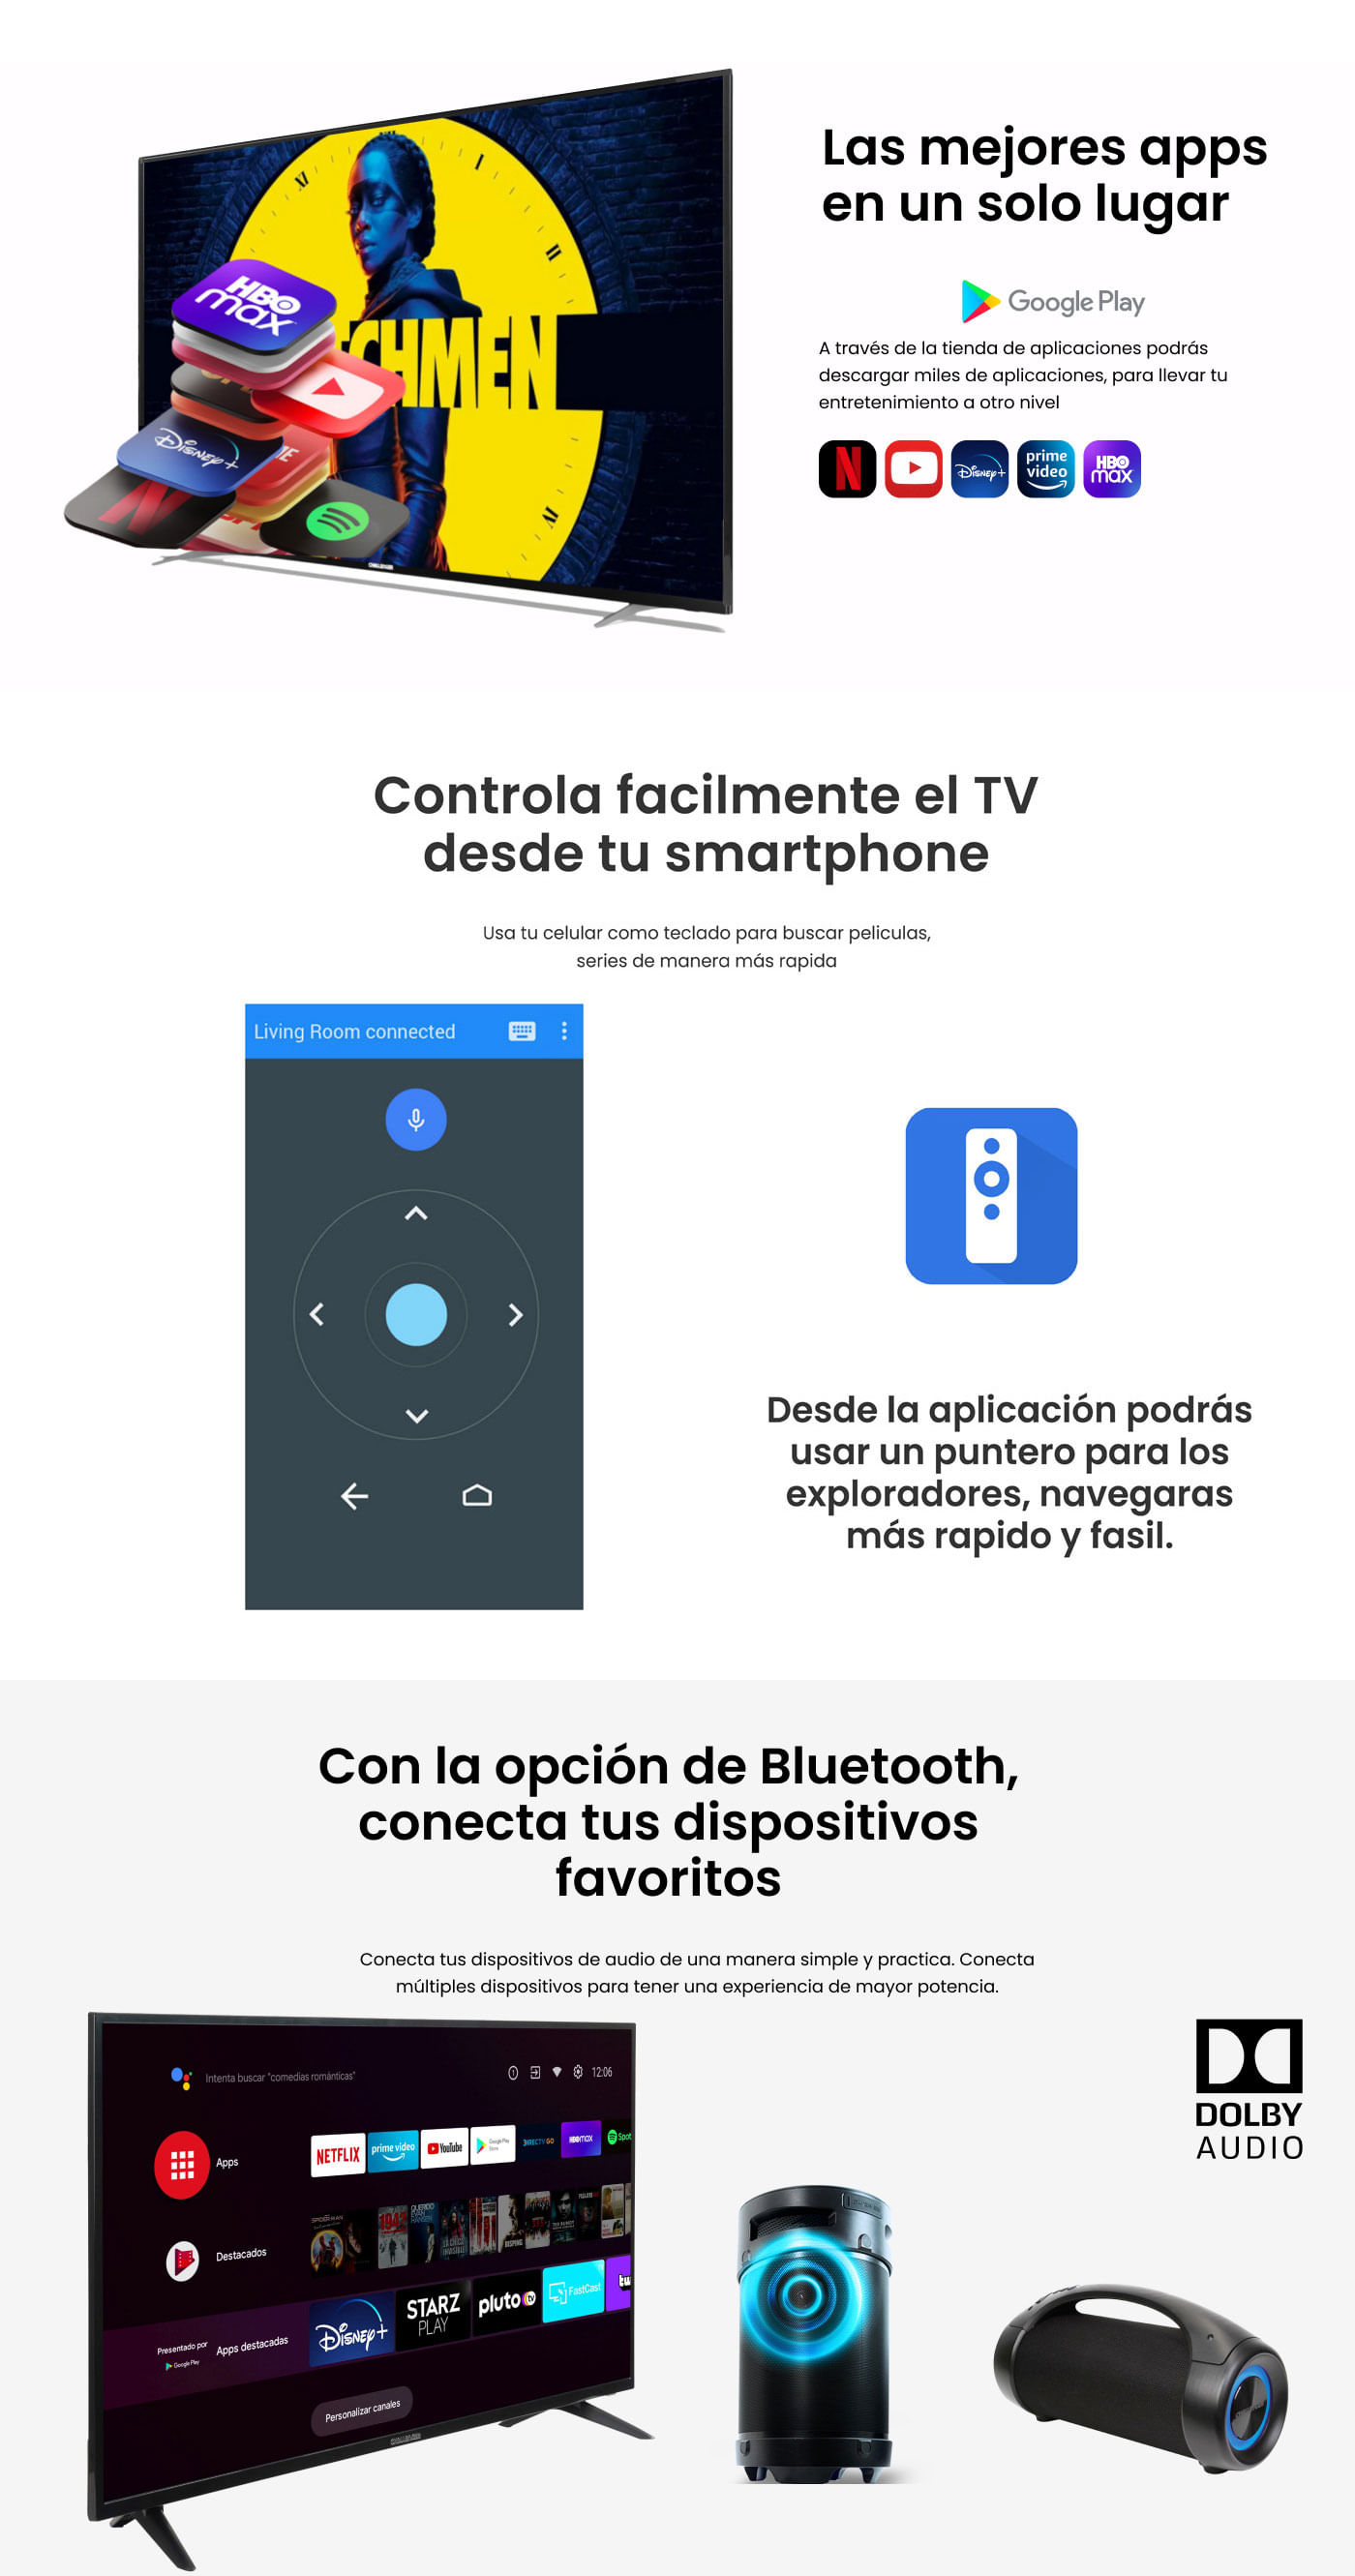 Televisor 65 Pulgadas Challenger Android TV UHD Smart TV Bluetooth -  Netflix - Challenger